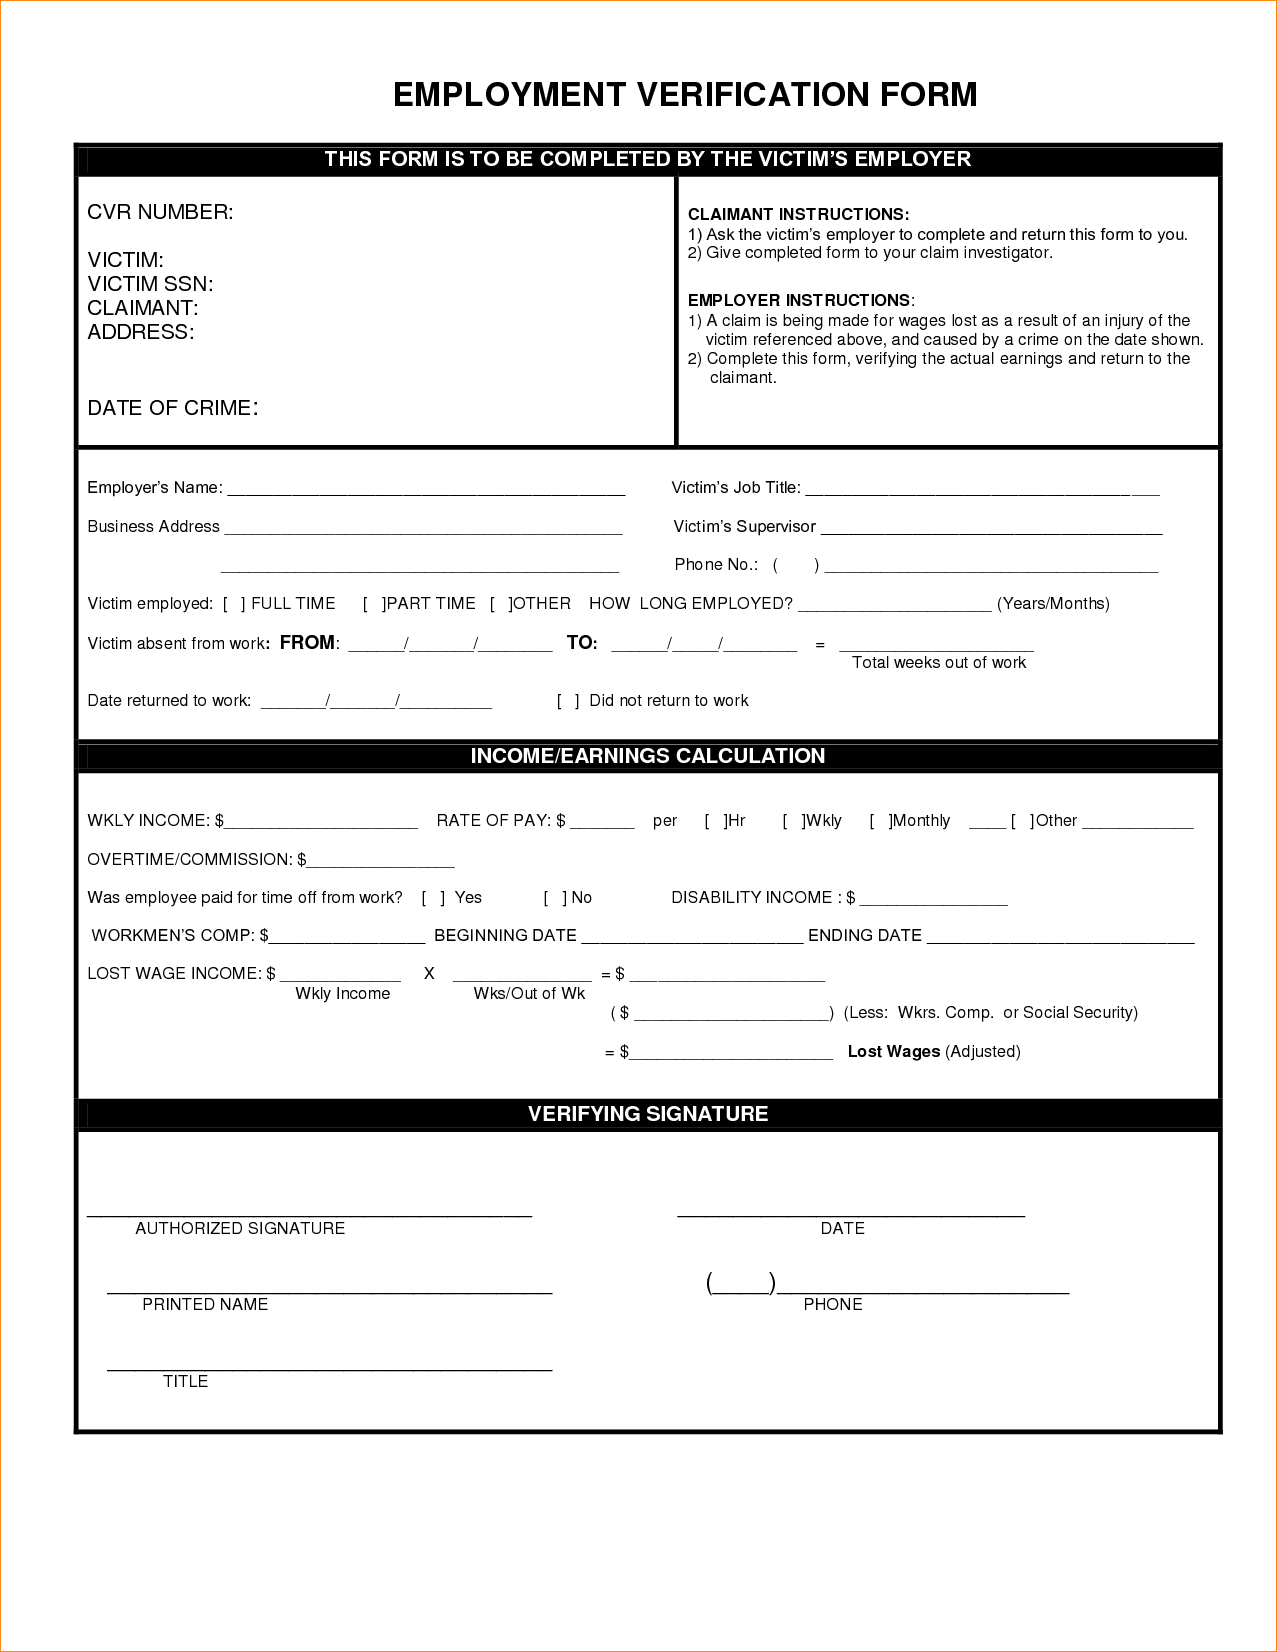 employment verification form